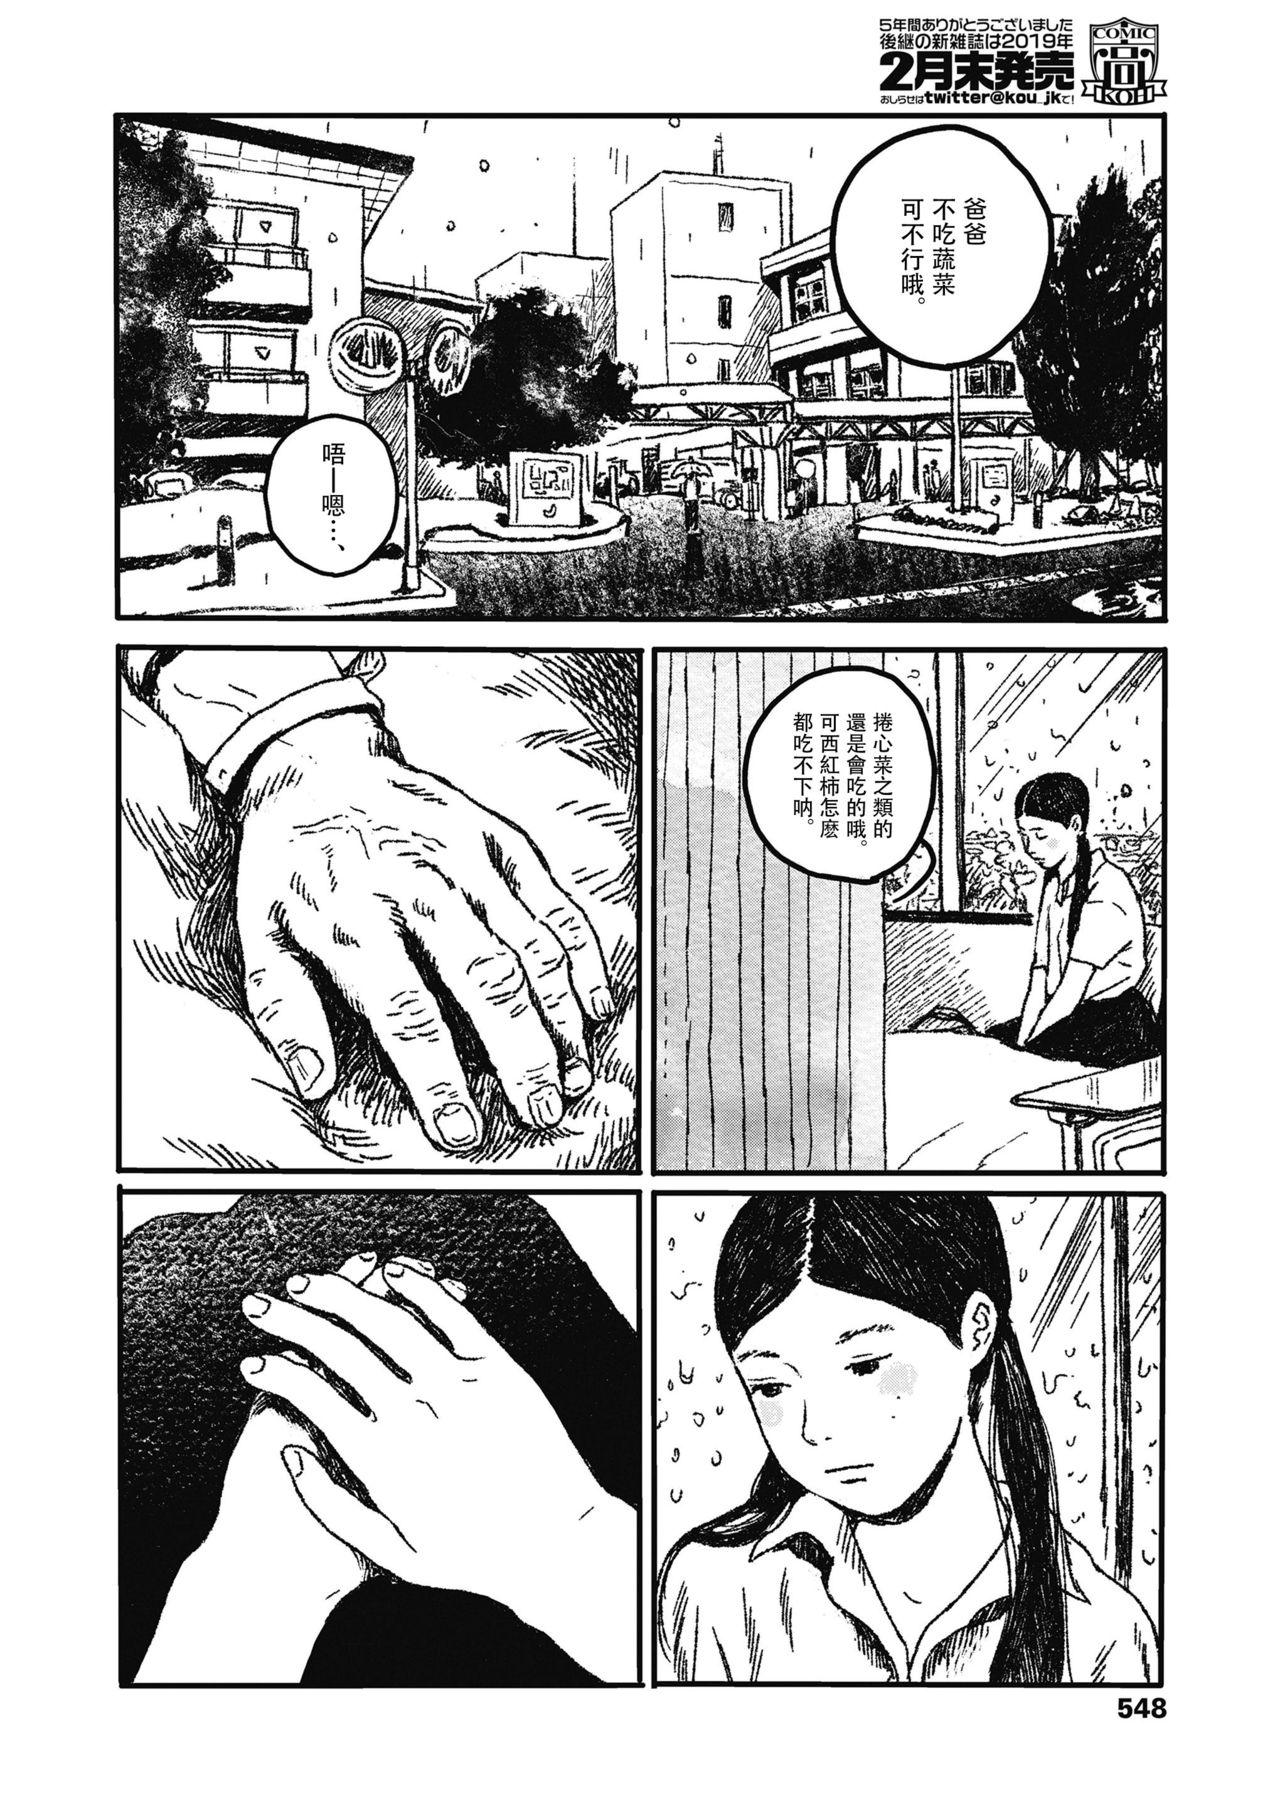 Ureshii Kao wa tyanto Dekinai | 笑顔難展 7